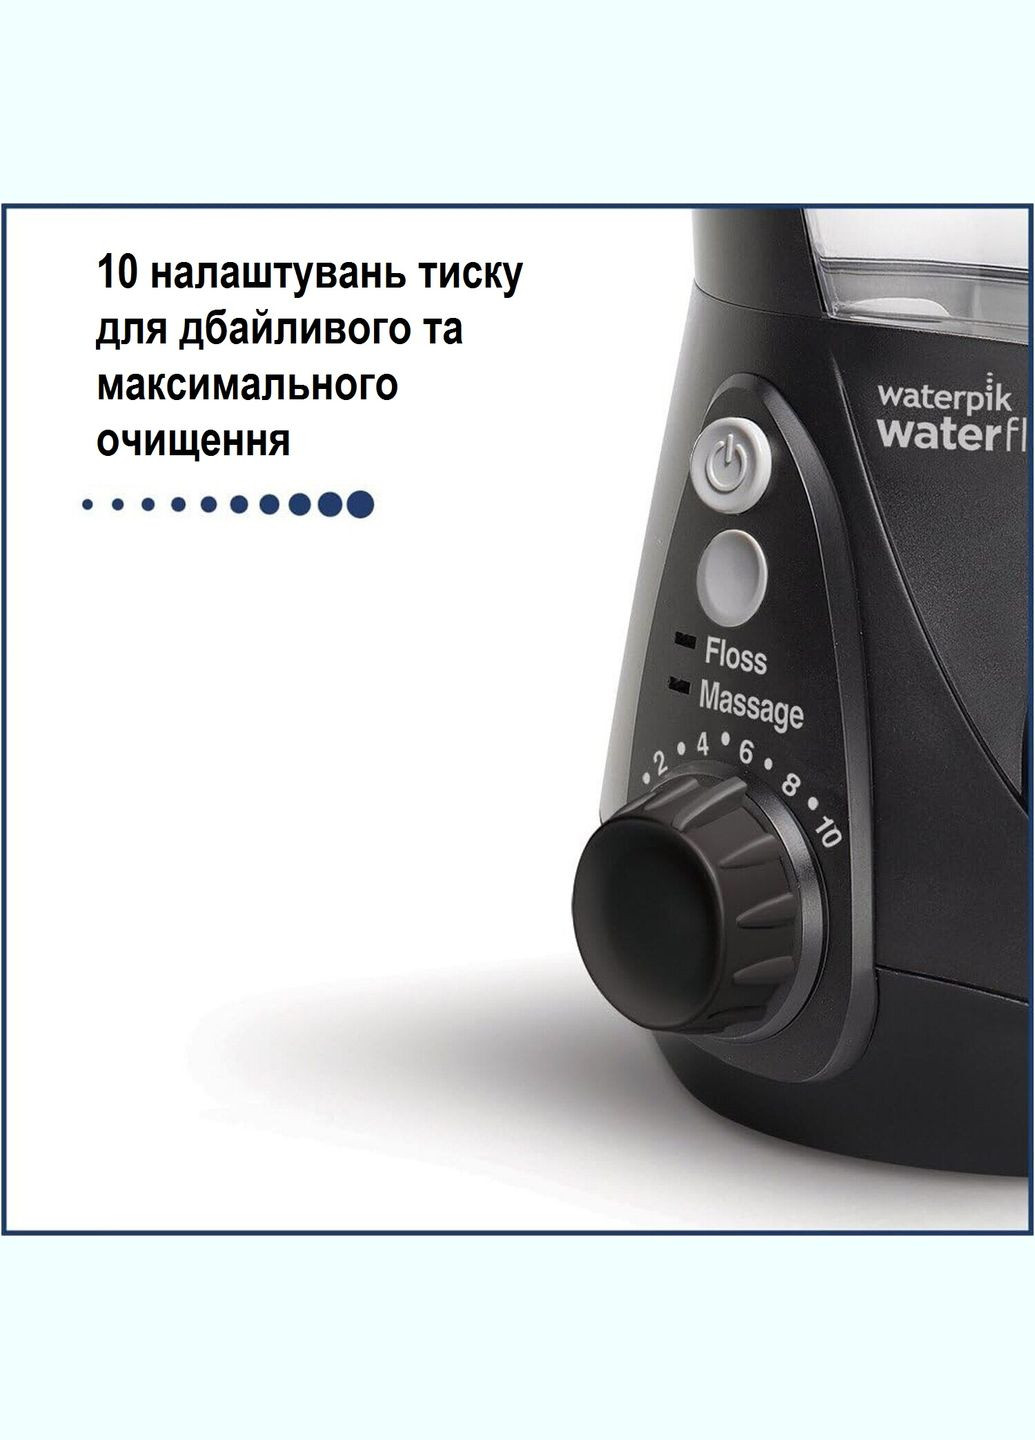 Стационарный ирригатор WP662UK Ultra Professional Water Flosser Black в коробке Waterpik (286422253)